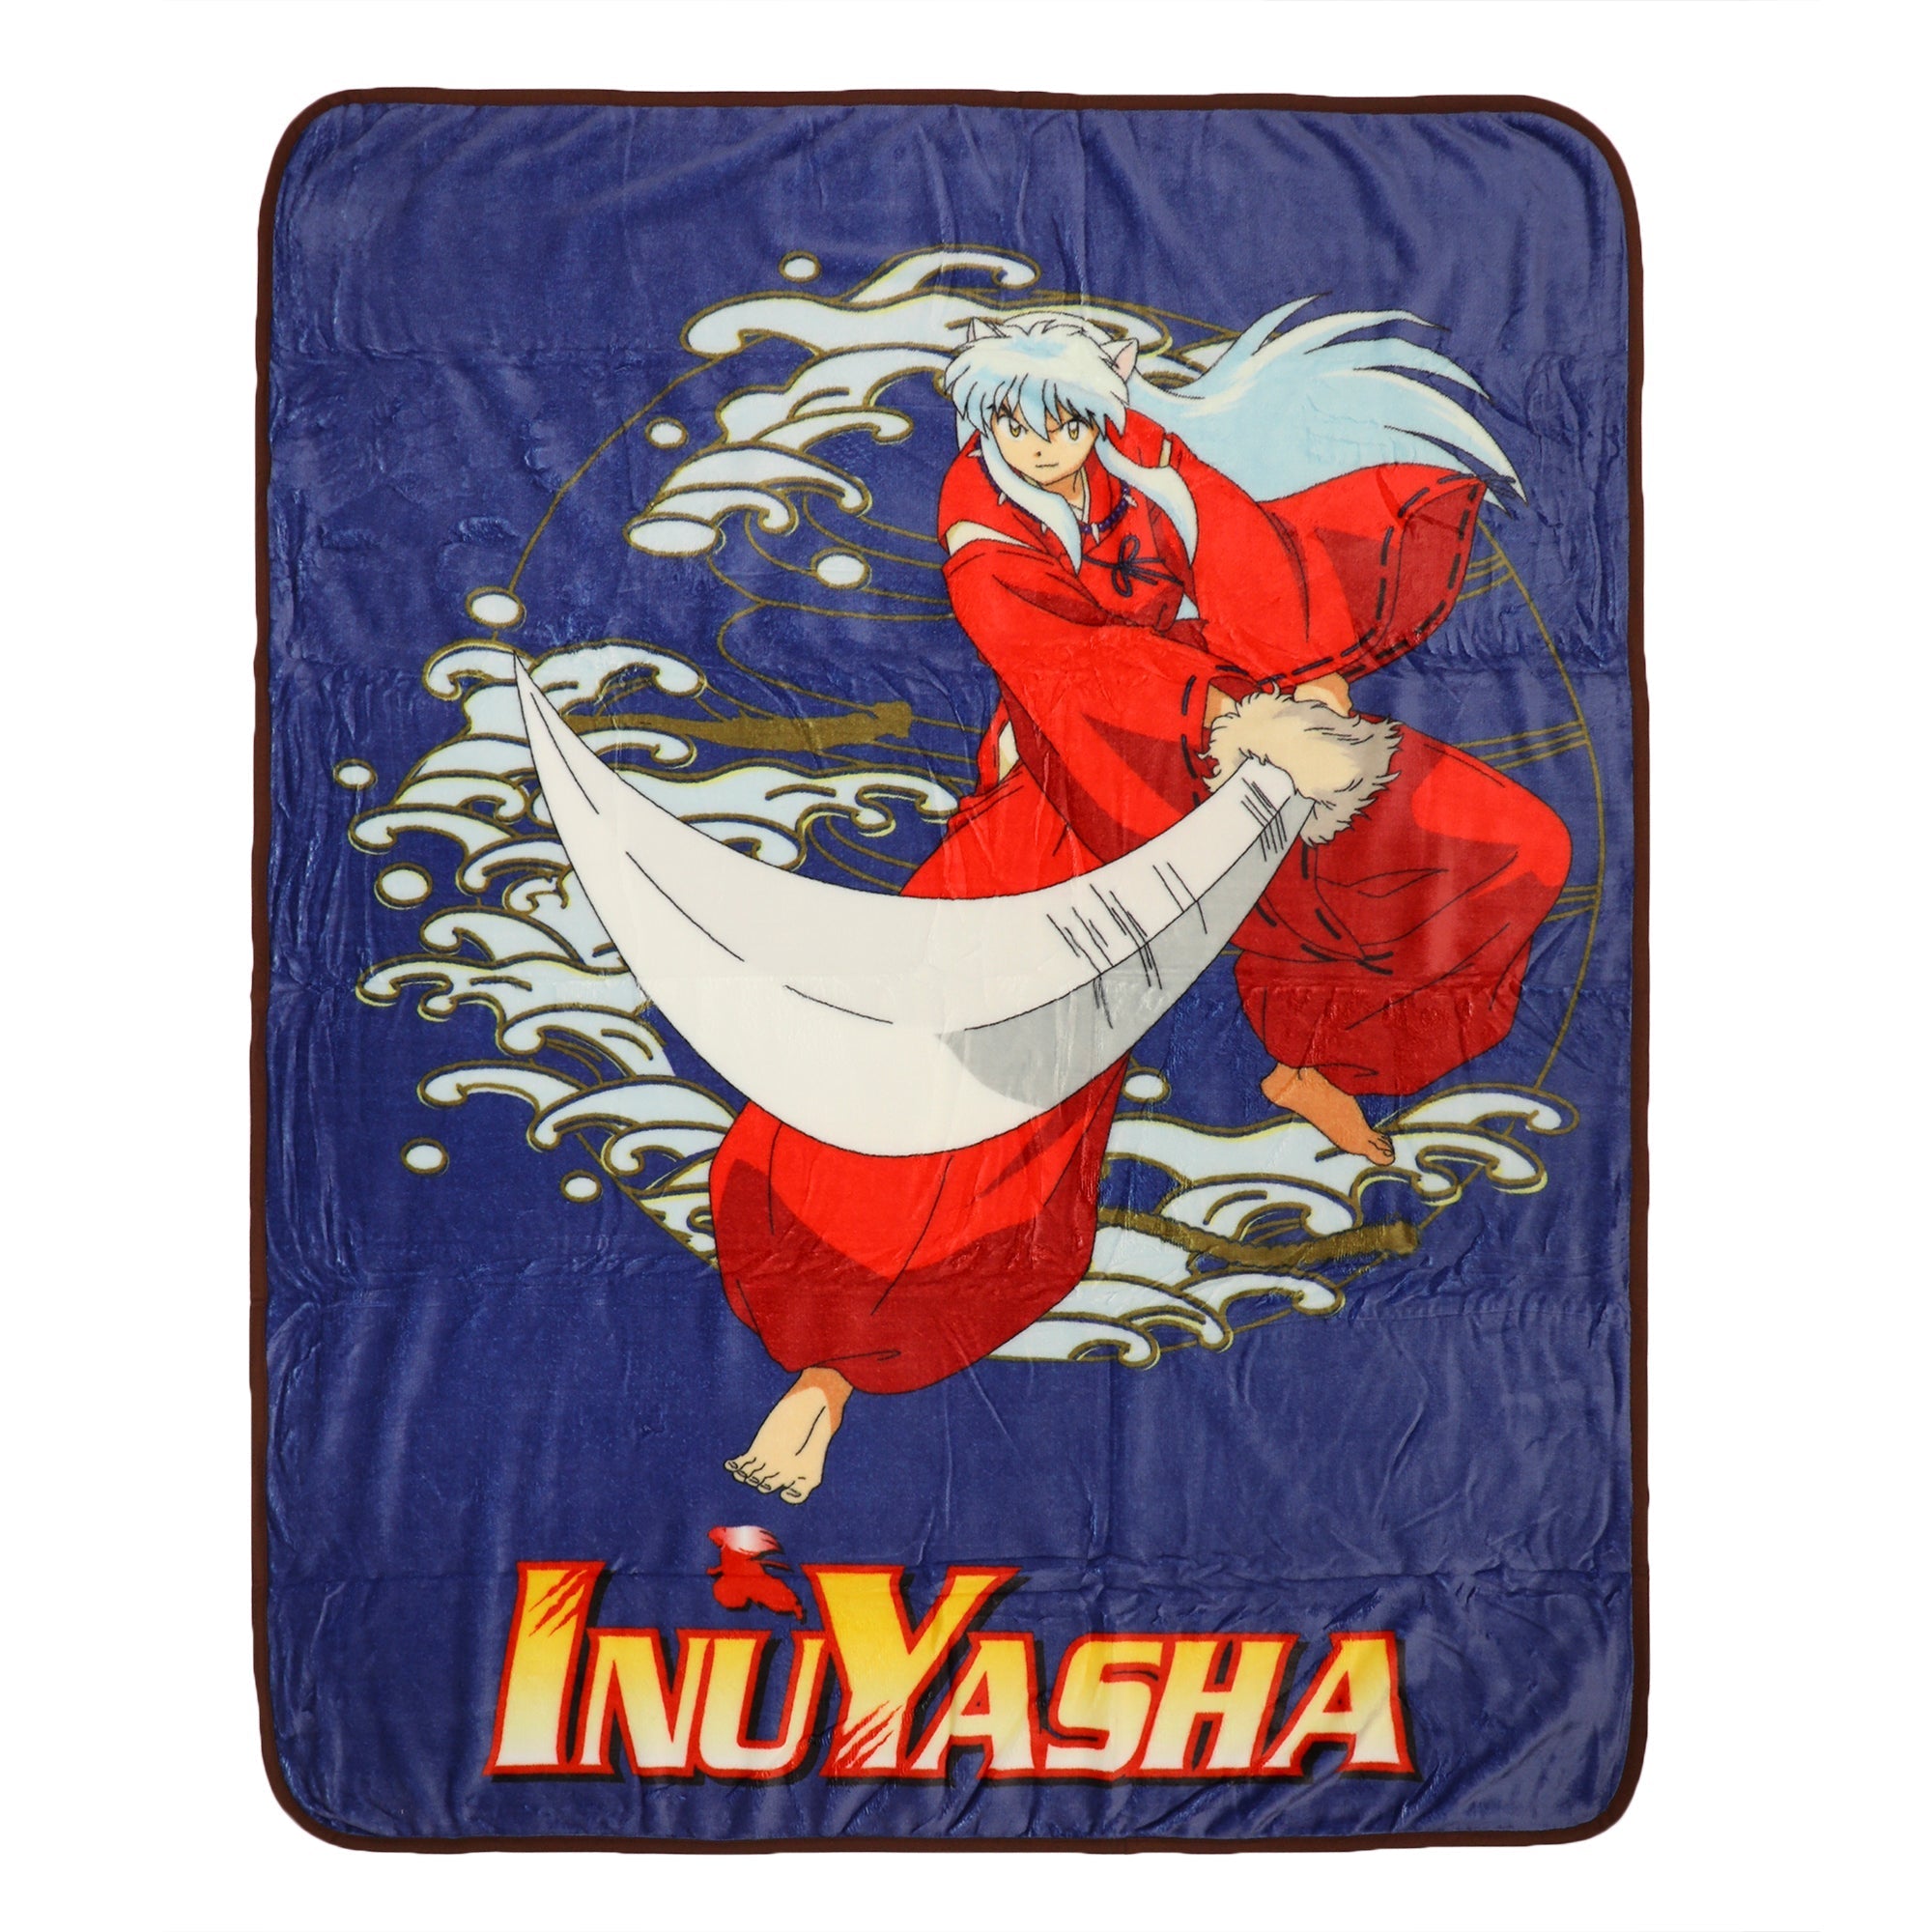 Inuyasha - Inuyasha Waves Throw Blanket image count 0